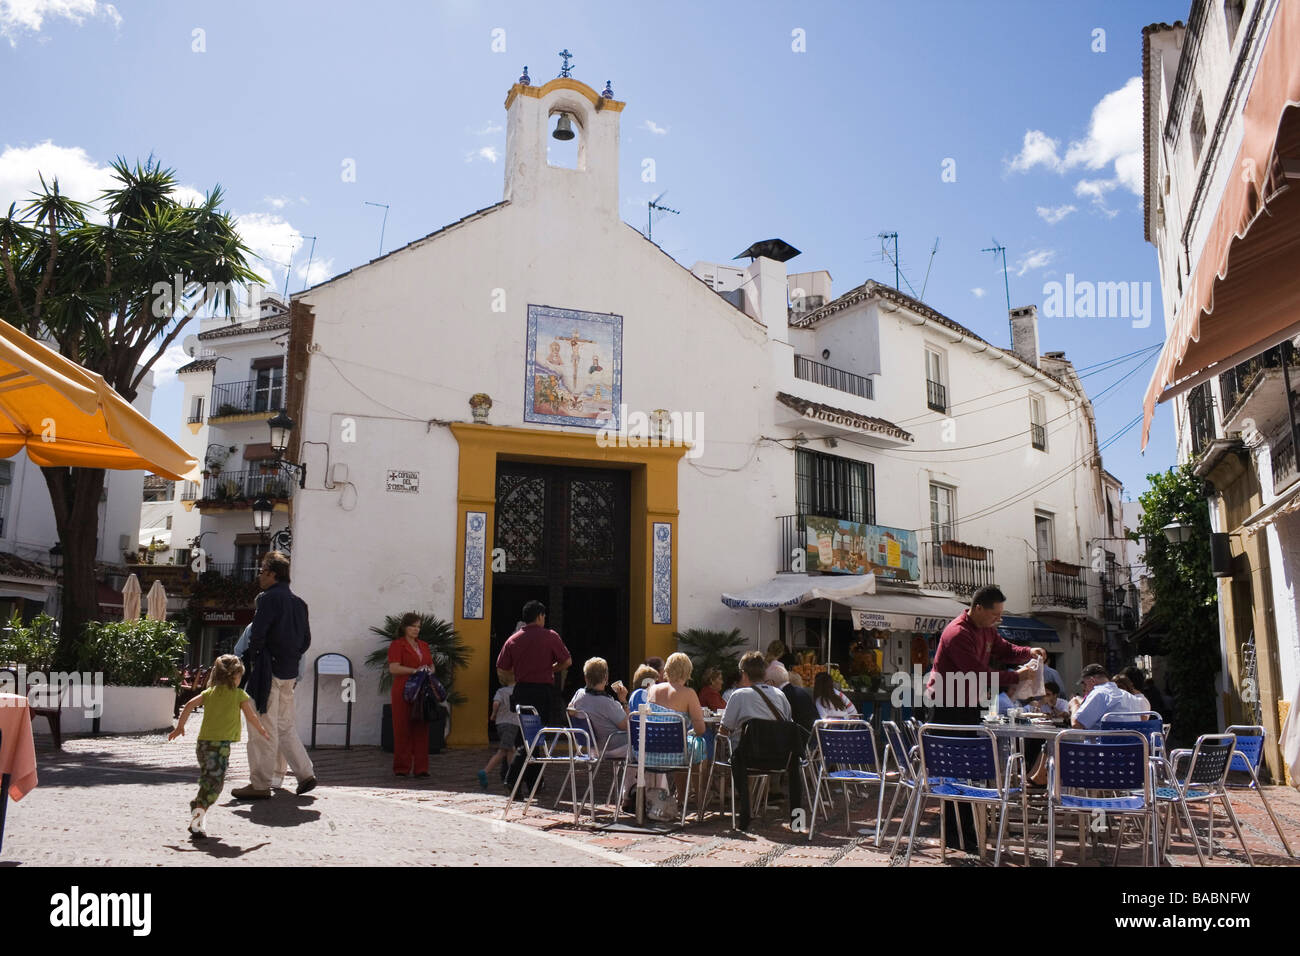 Marbella Malaga Province Costa del Sol Spain Tourists enjoying the sunshine in the Orange Square in the old town Stock Photo